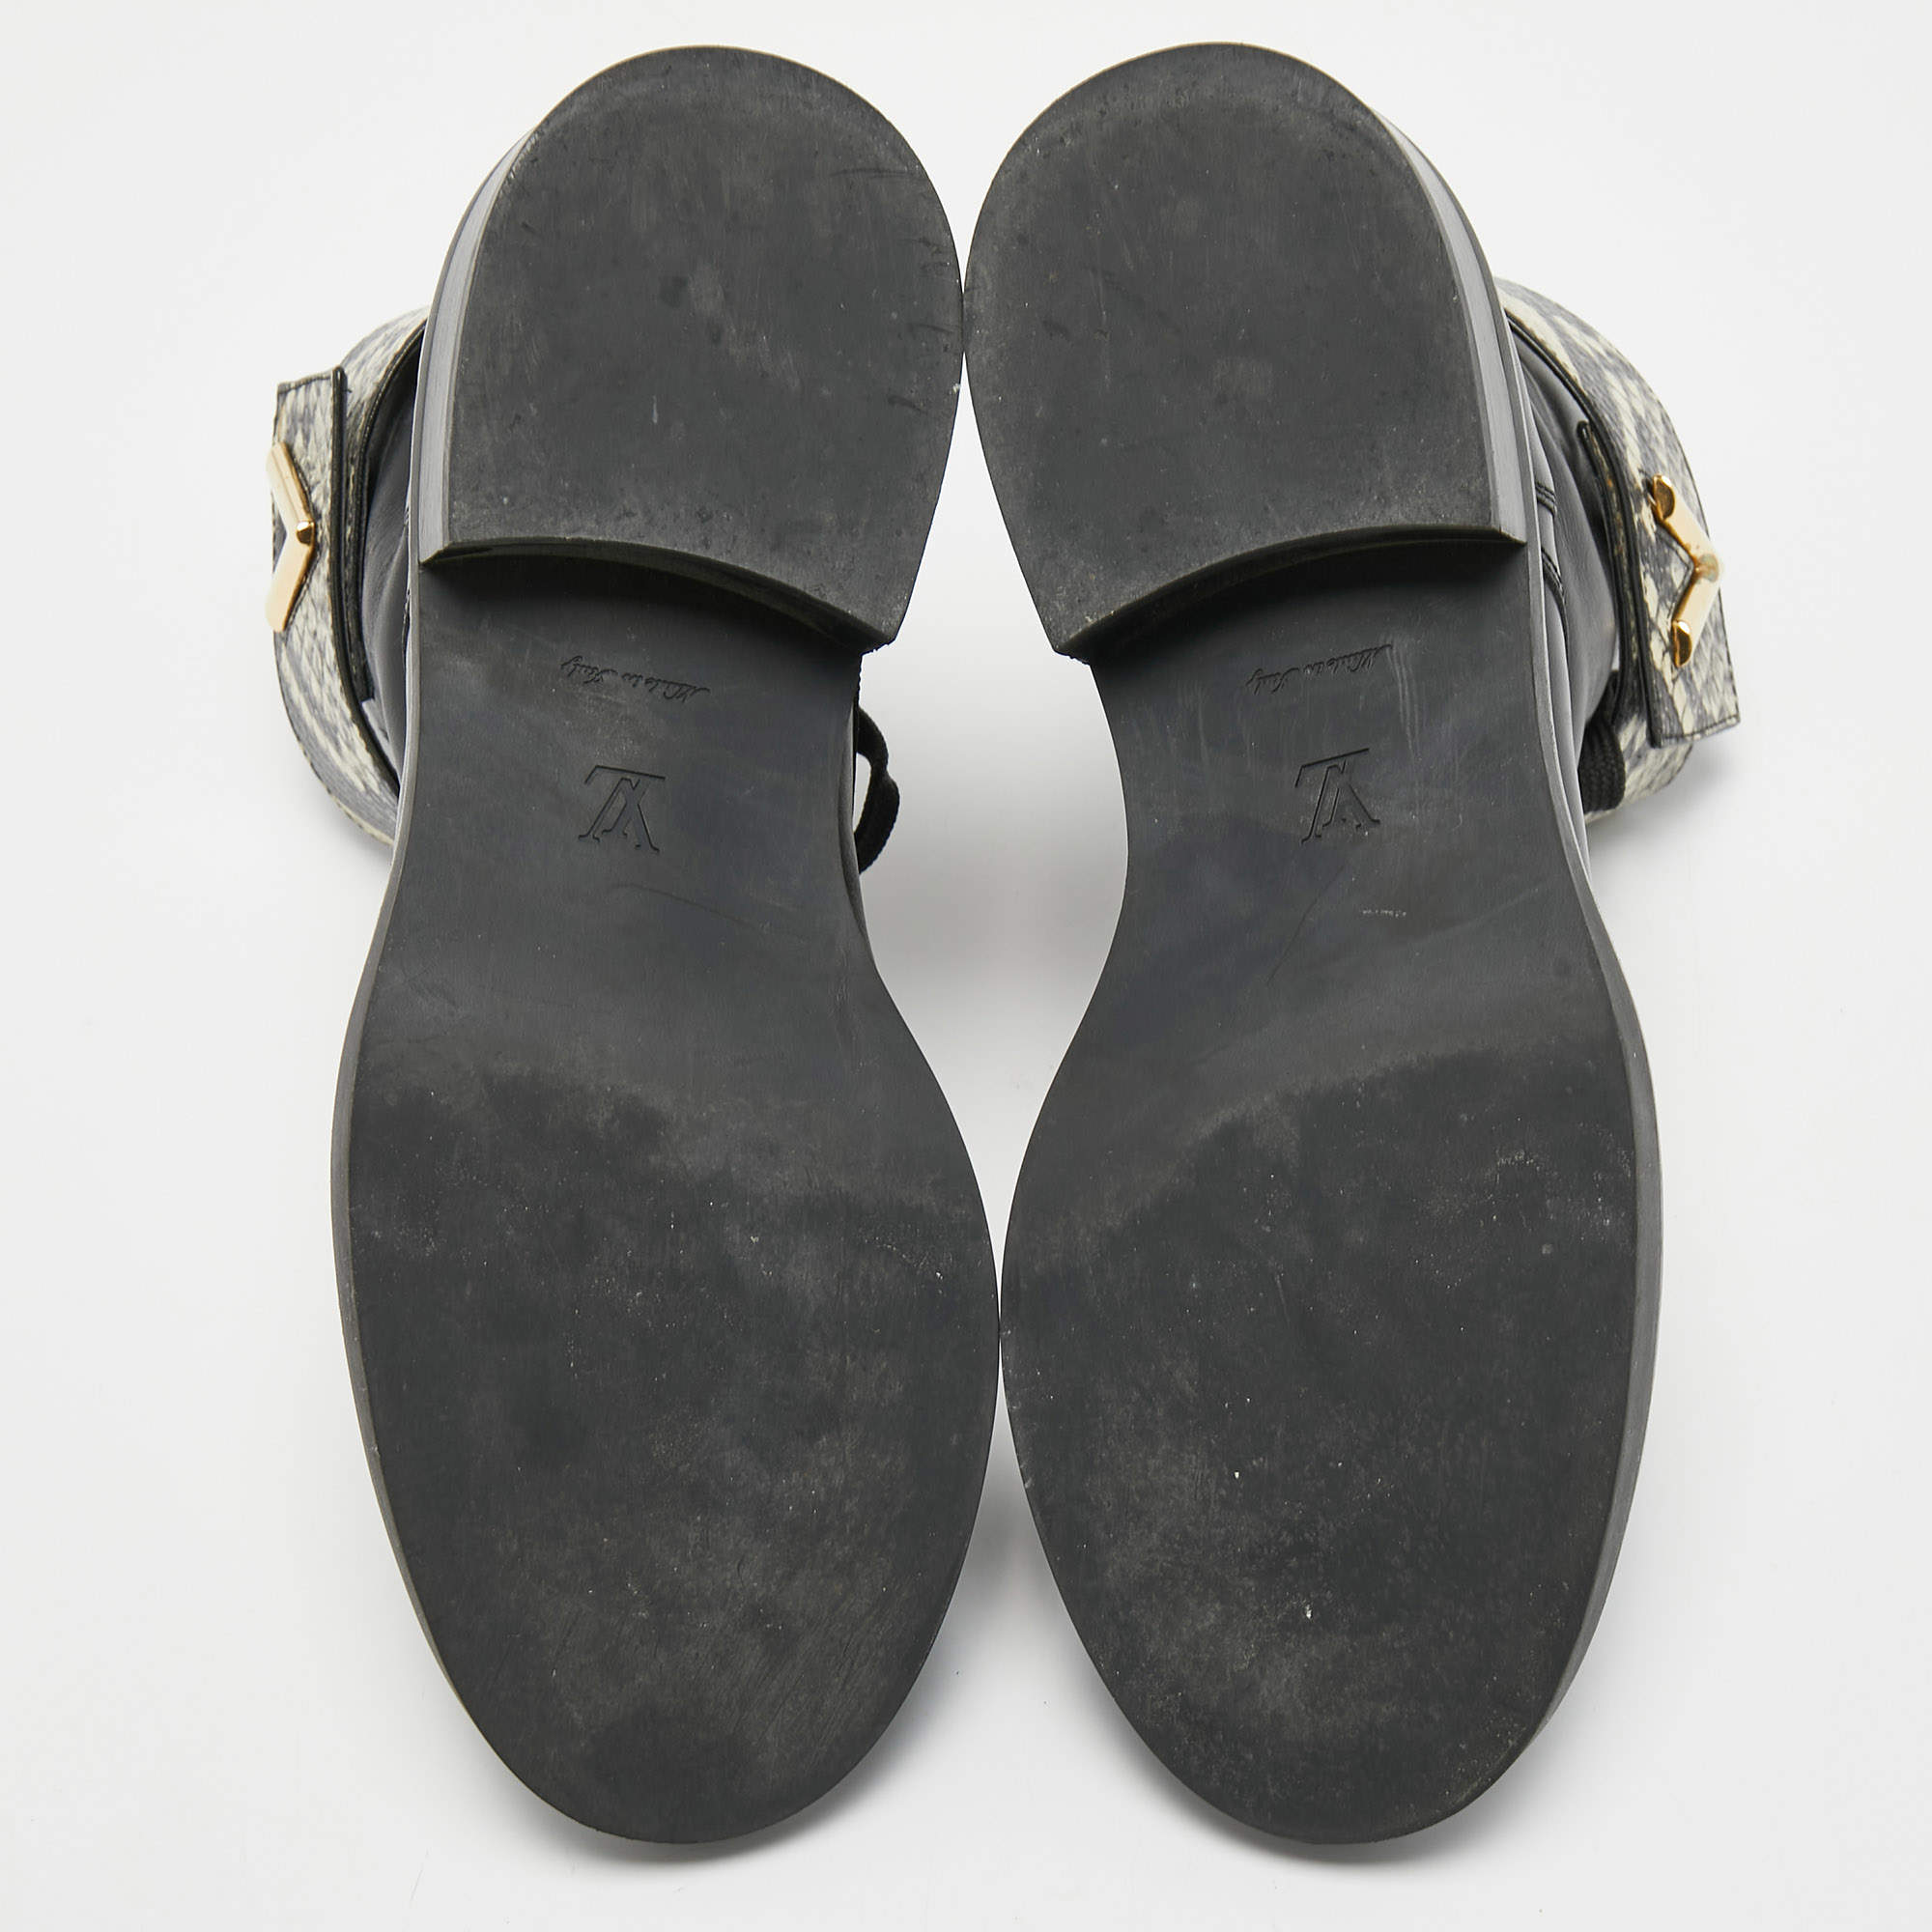 Louis Vuitton Black/White Leather And Python Wonderland Ranger Ankle Boots  Size 37 Louis Vuitton